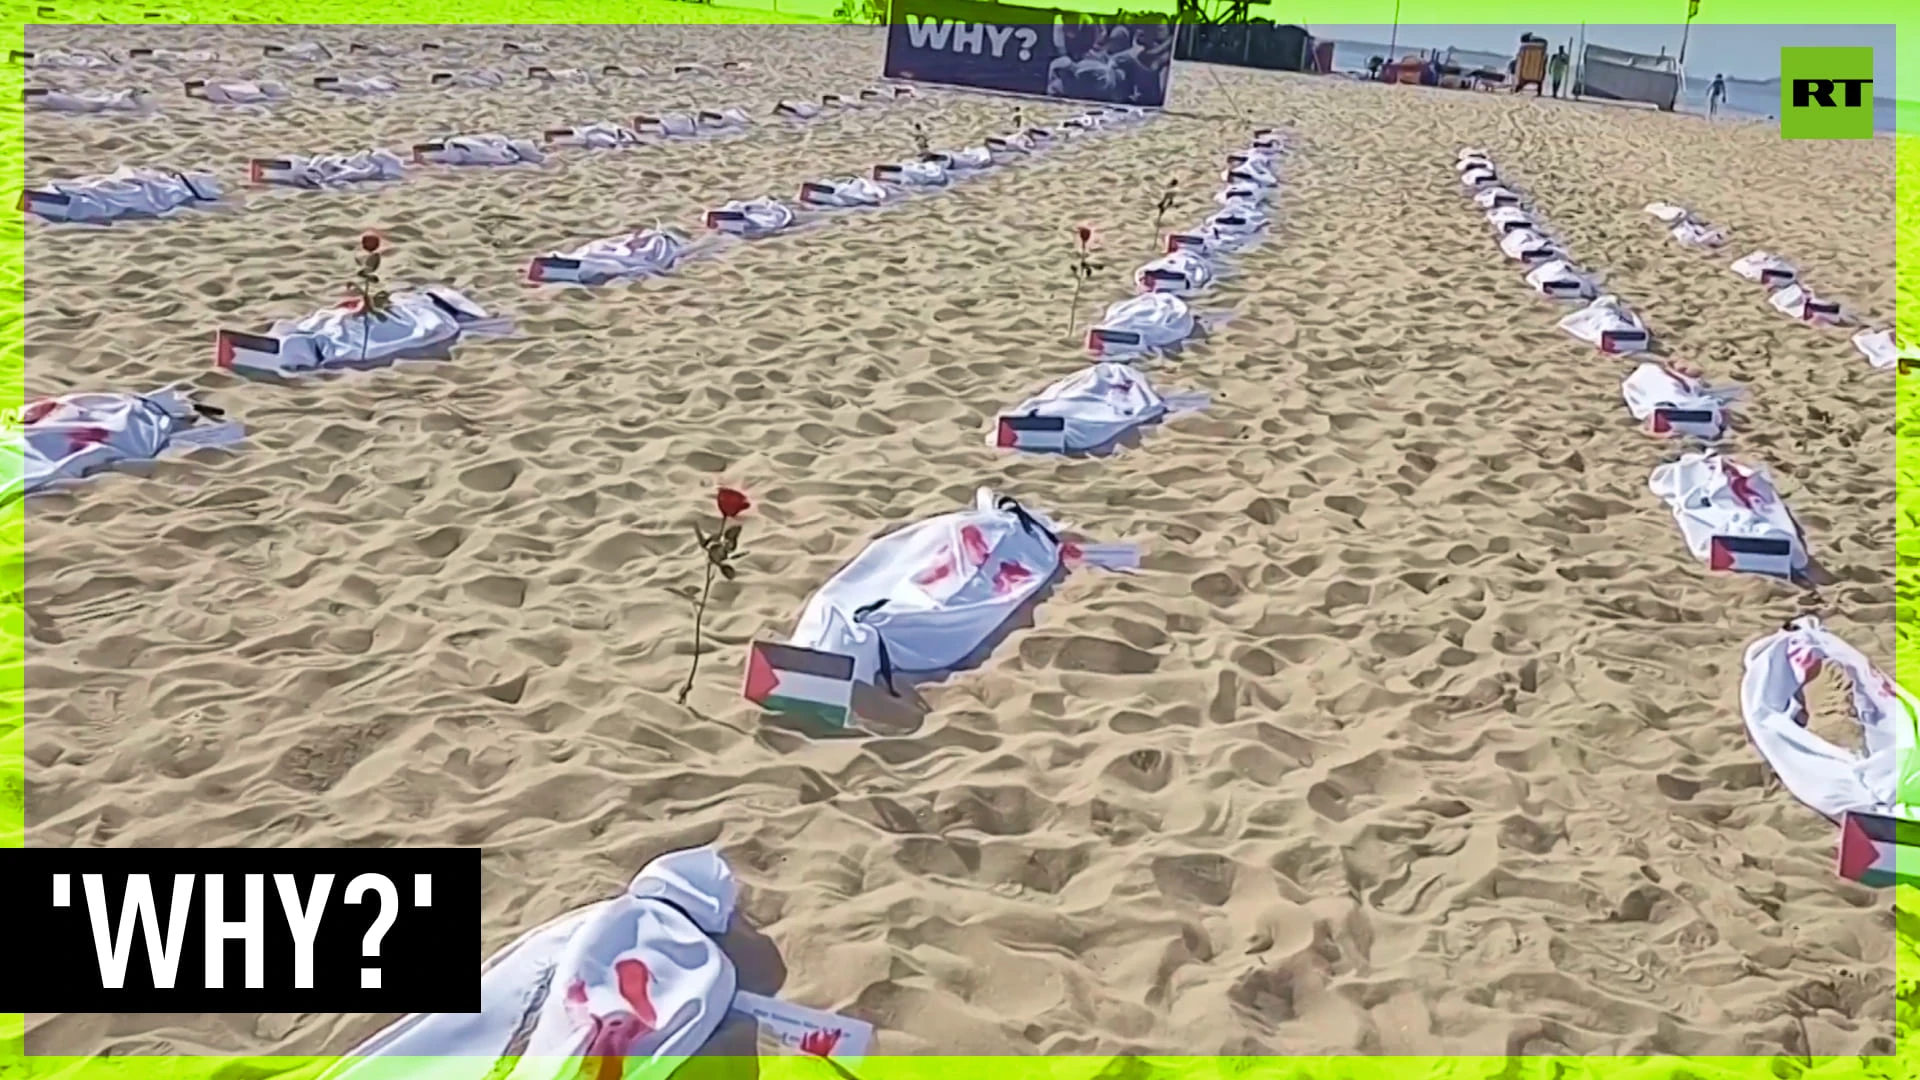 120 burial shrouds lay on Brazilian beach in tribute to children killed in Gaza